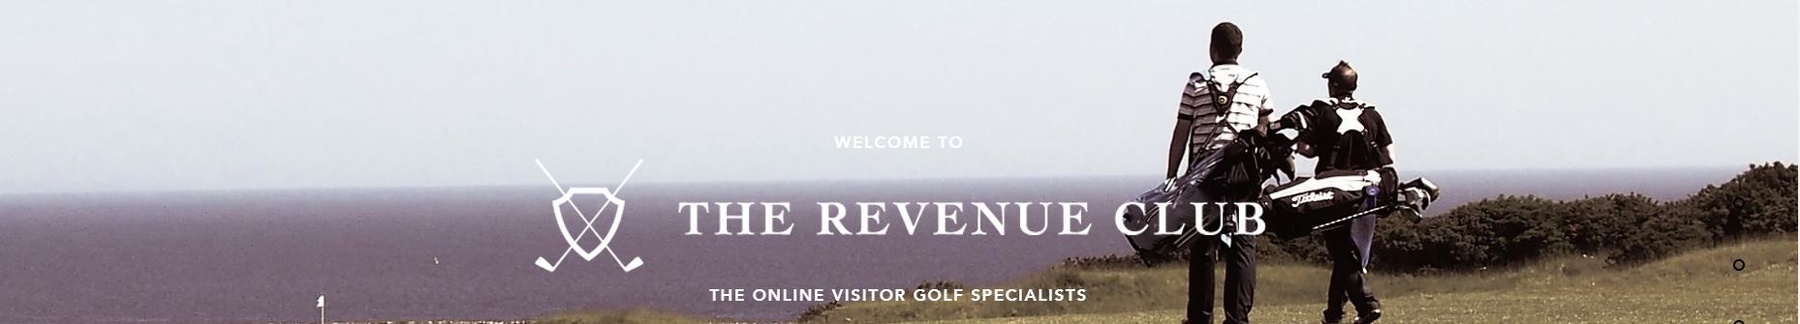 The Revenue Club header